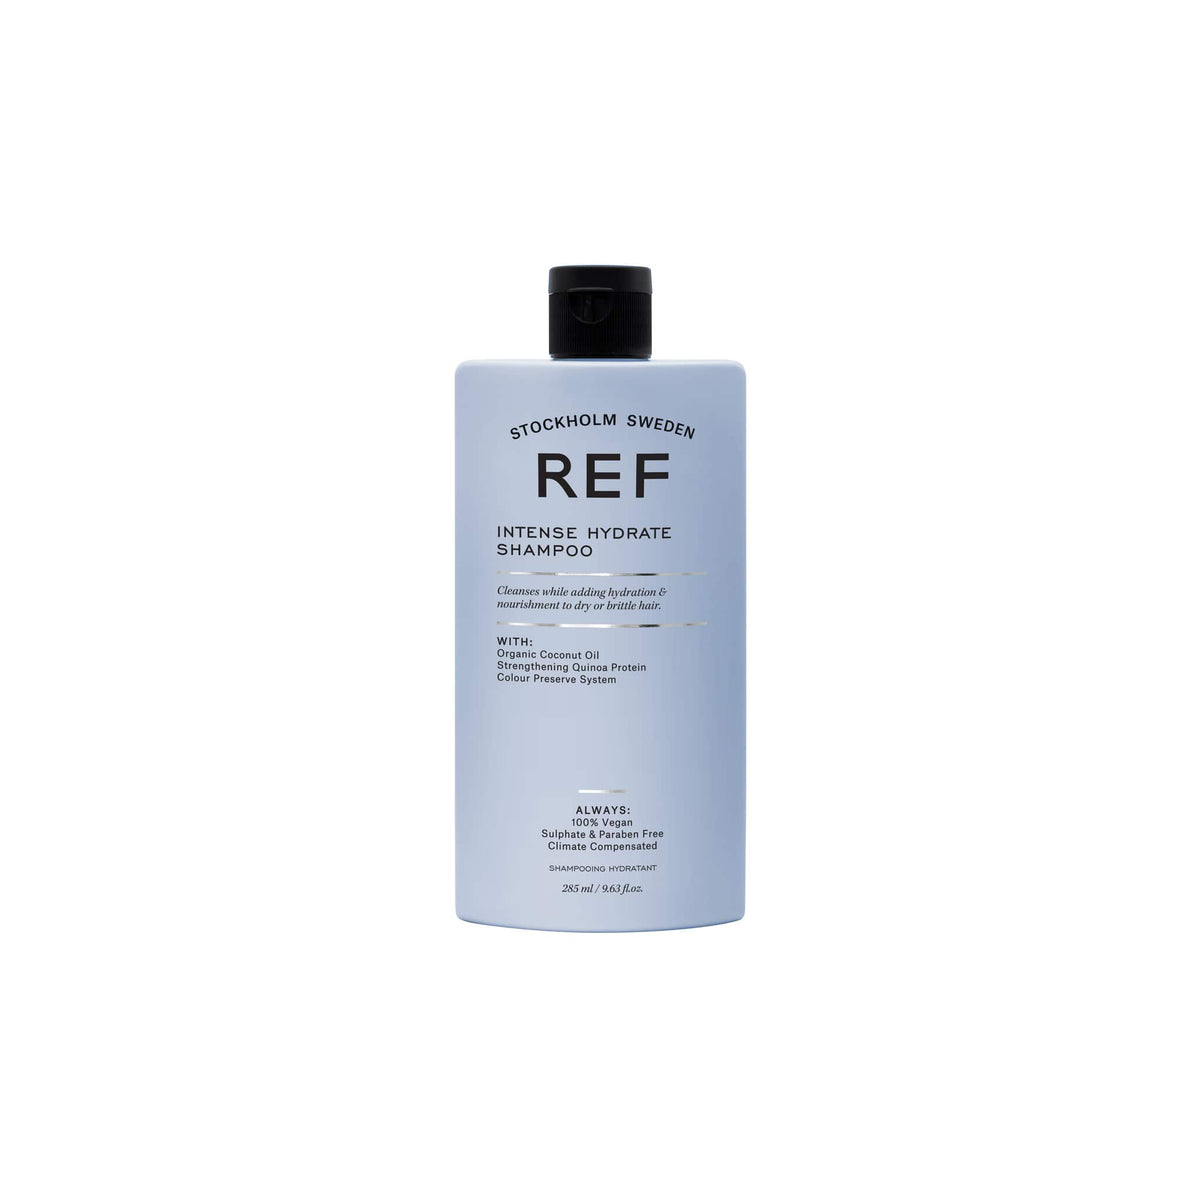 REF. Intense Hydrate Shampoo 285ml